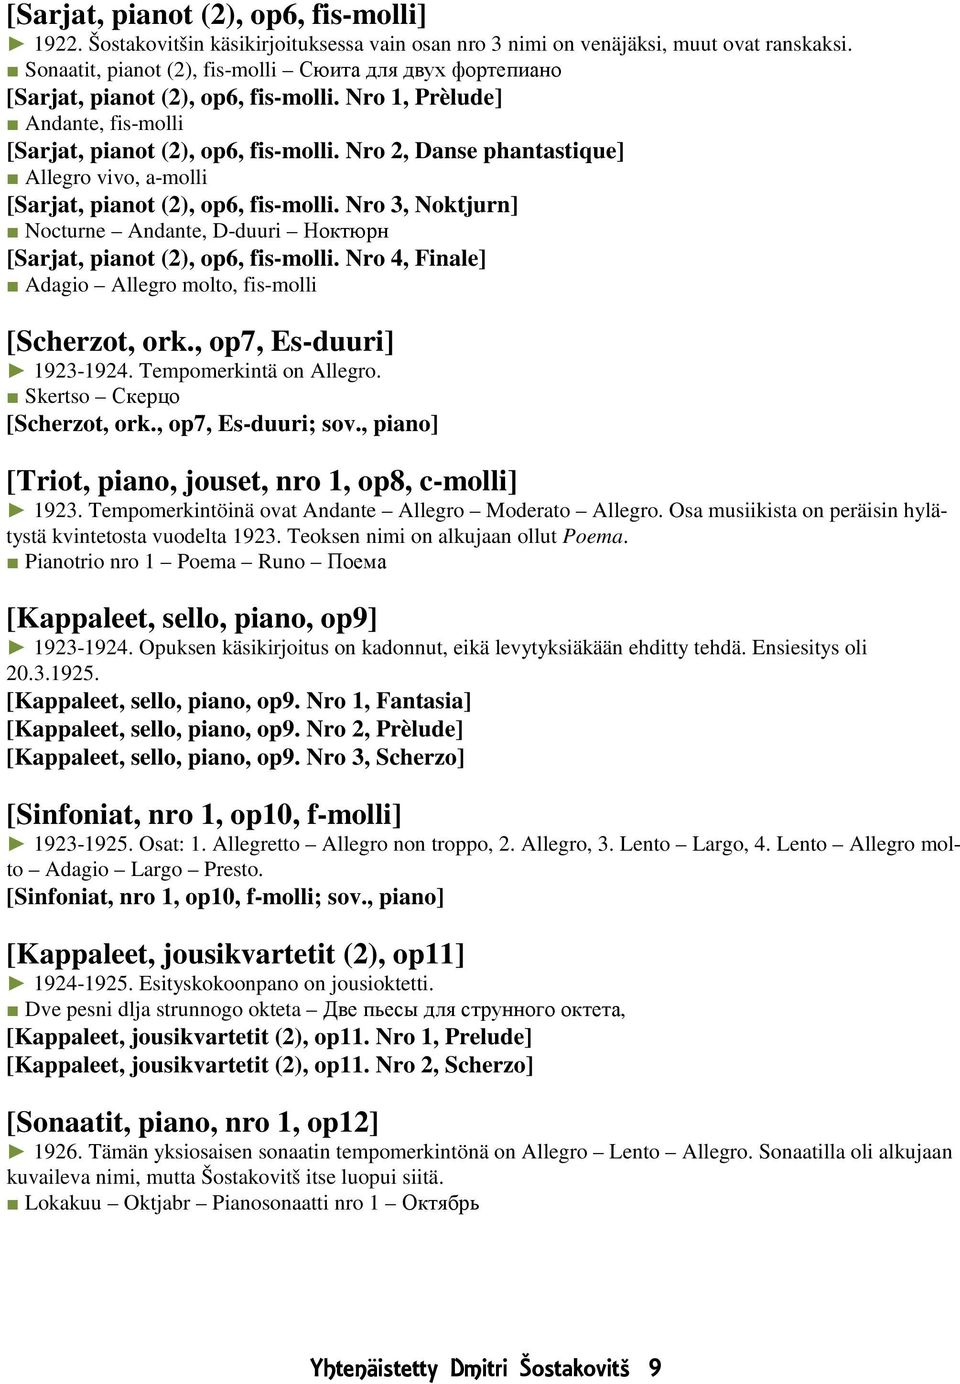 Nro 2, Danse phantastique] Allegro vivo, a-molli [Sarjat, pianot (2), op6, fis-molli. Nro 3, Noktjurn] Nocturne Andante, D-duuri Ноктюрн [Sarjat, pianot (2), op6, fis-molli.